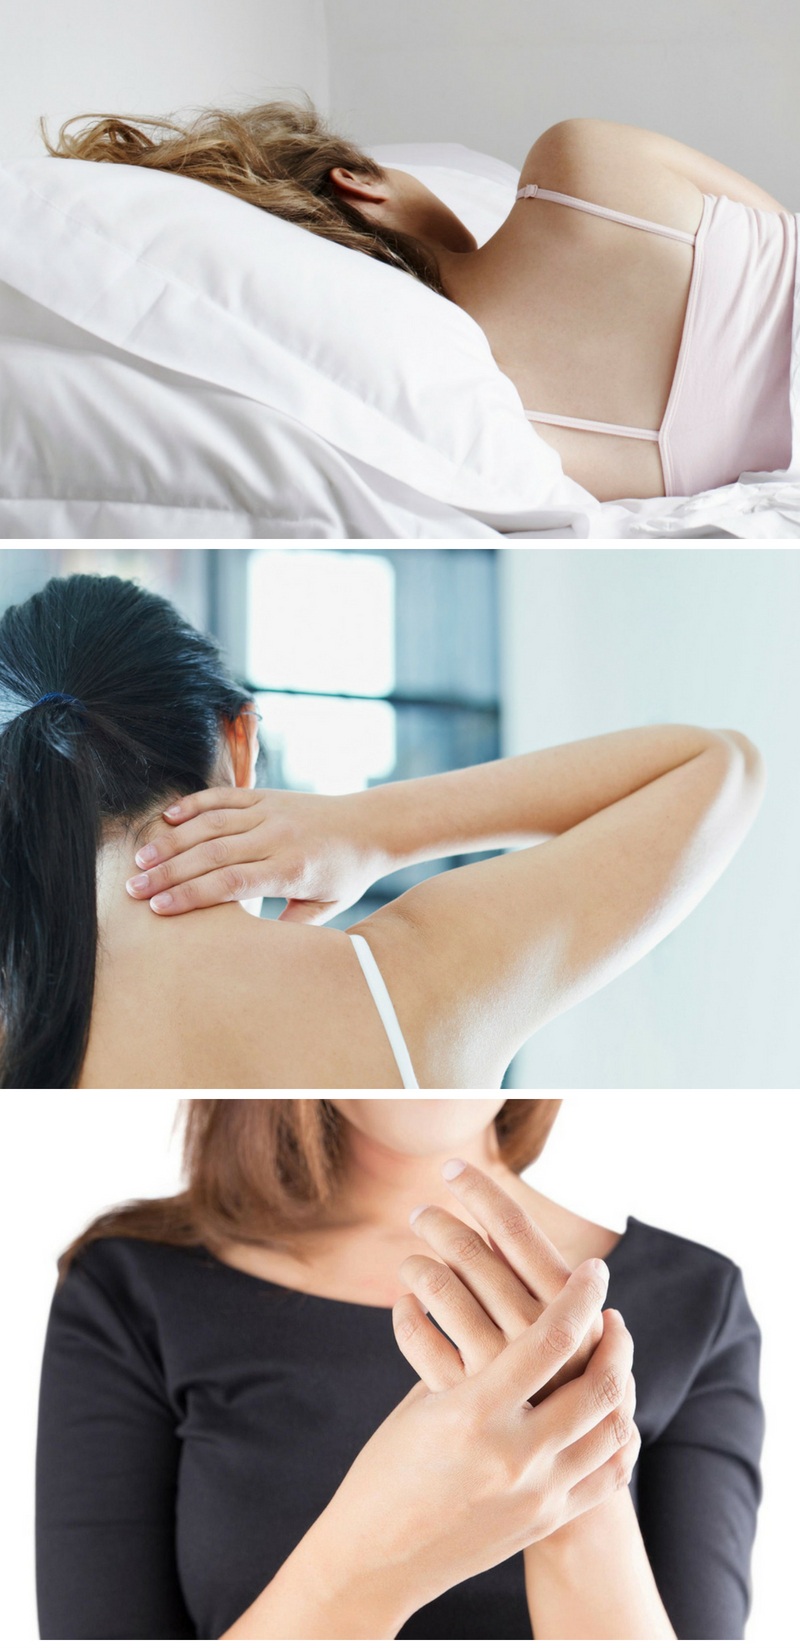 Benefits of Sleeping On Your Side